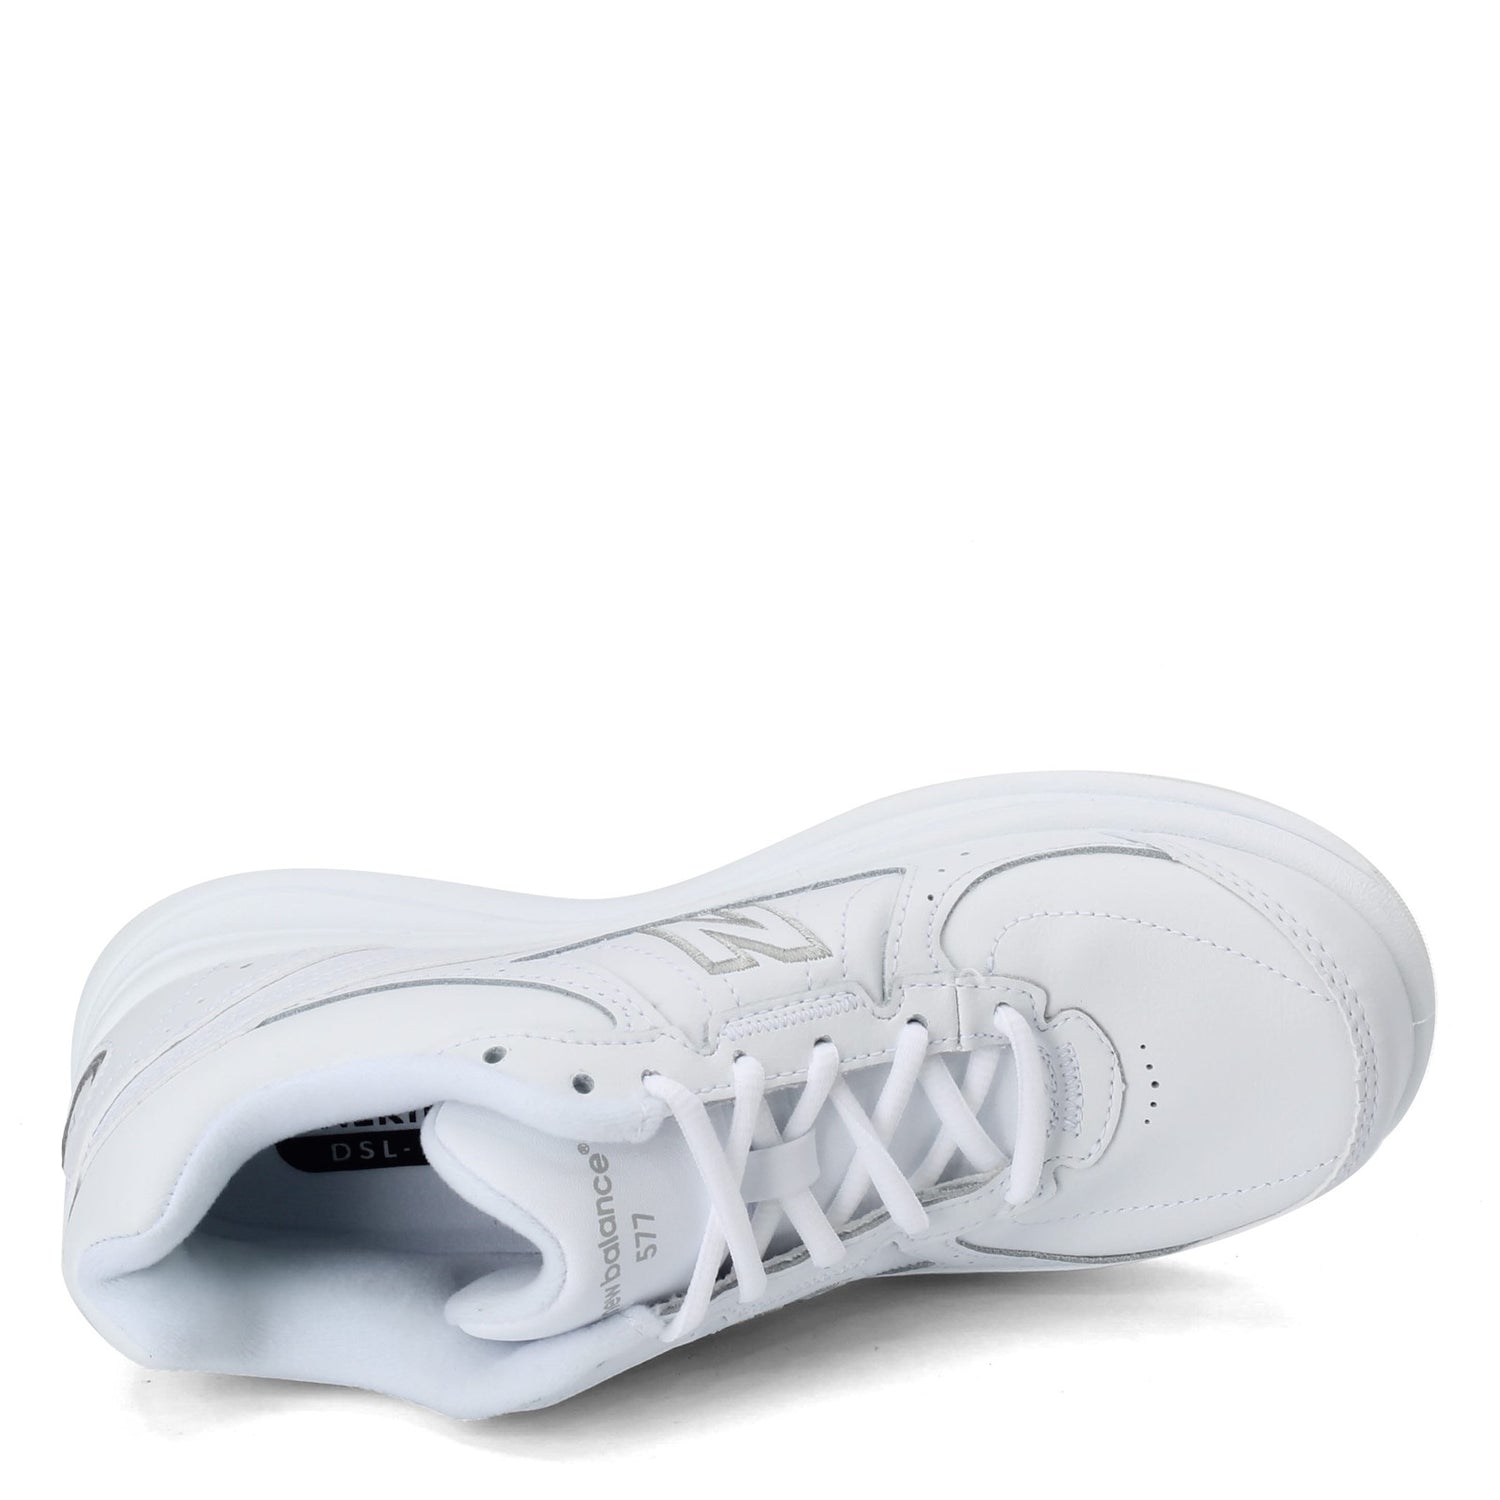 Peltz Shoes  Women's New Balance 577 Walking Shoe WHITE WW577WT